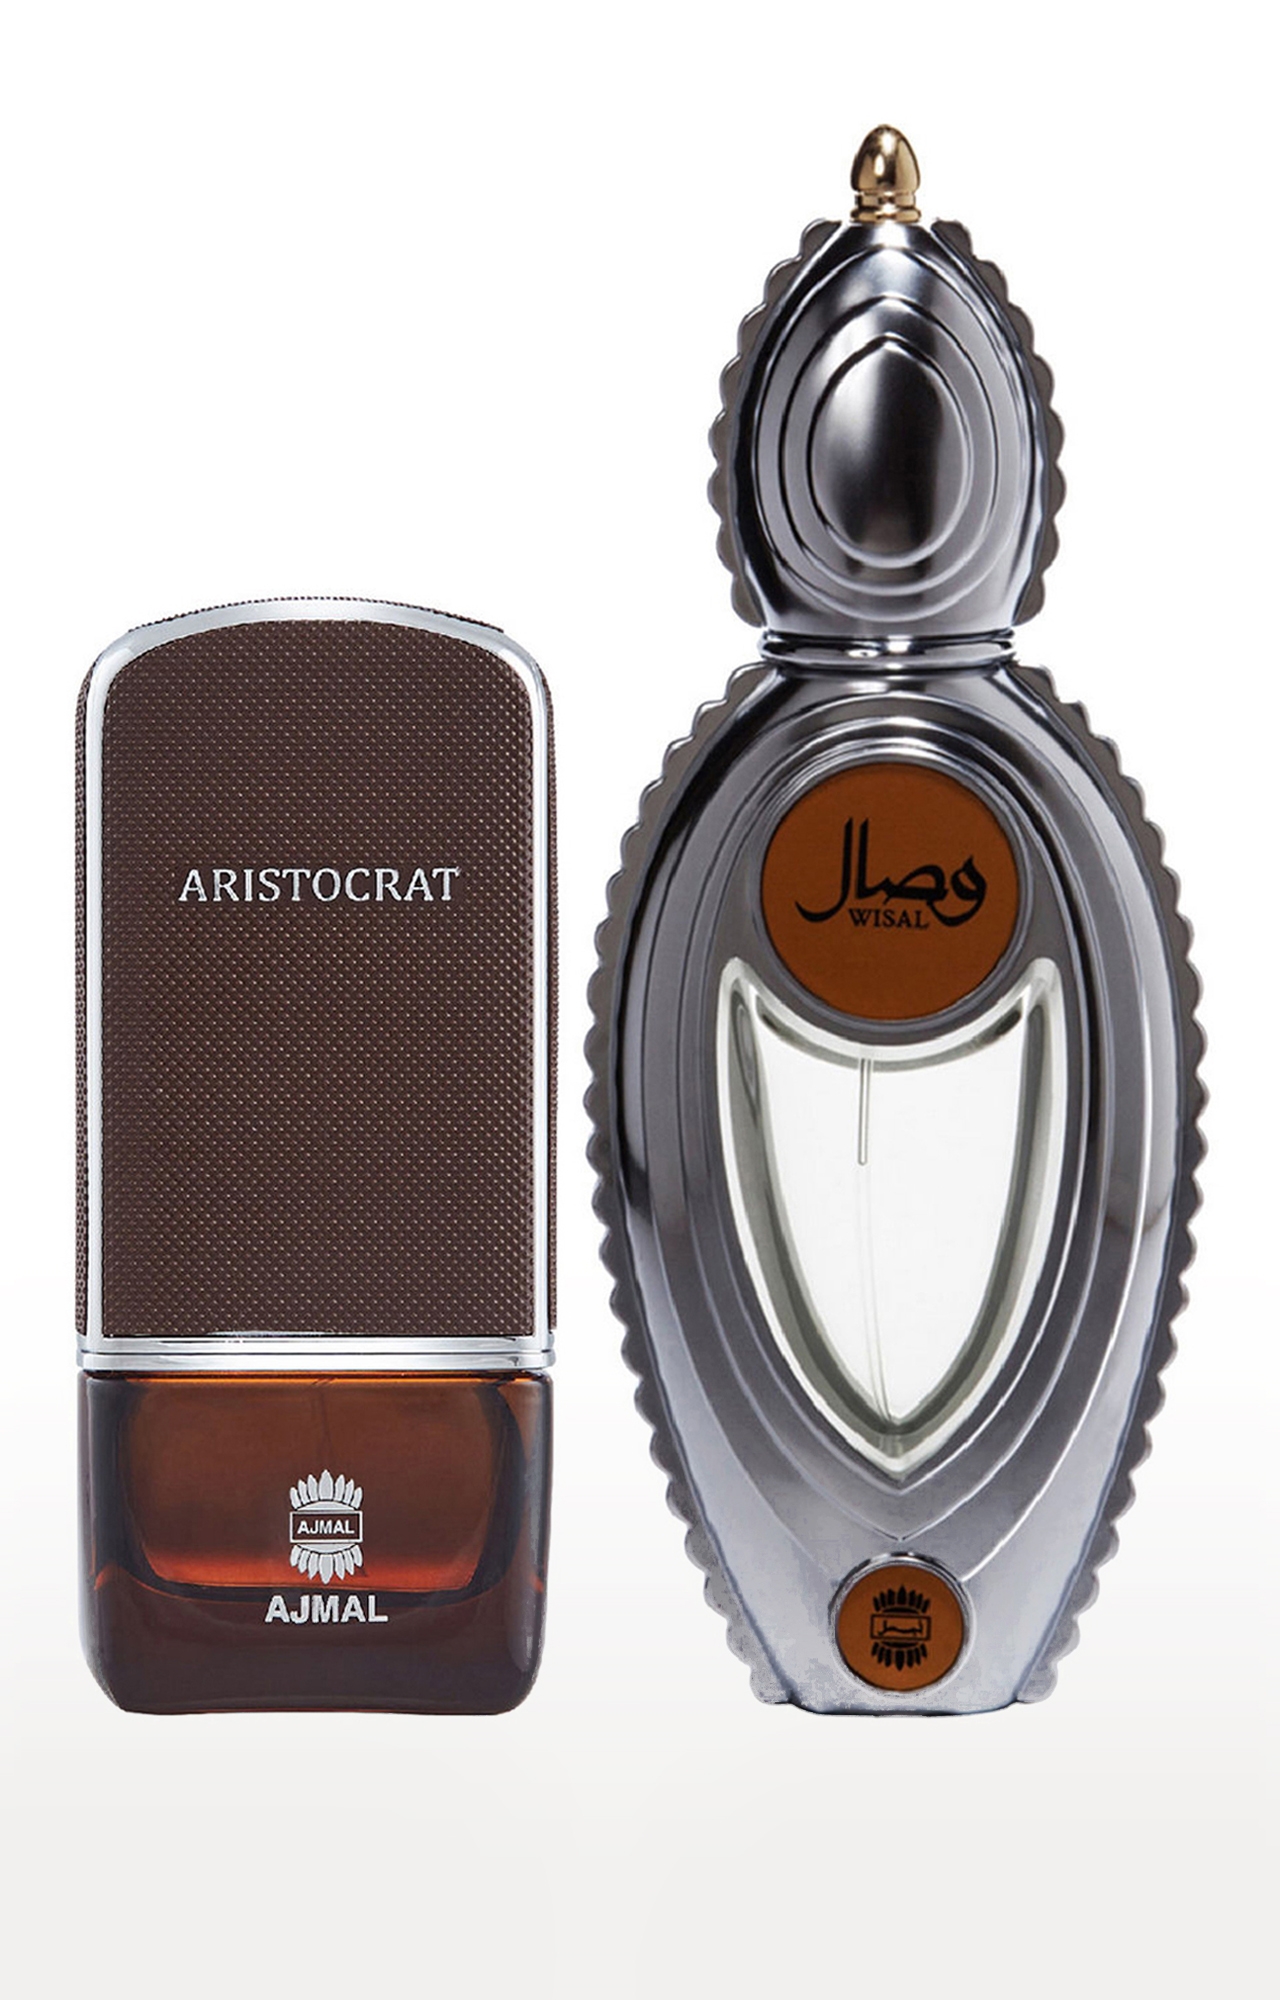 Ajmal Aristocrat EDP Perfume 75ml for Men and Wisal EDP Musky Perfume 50ml for Women